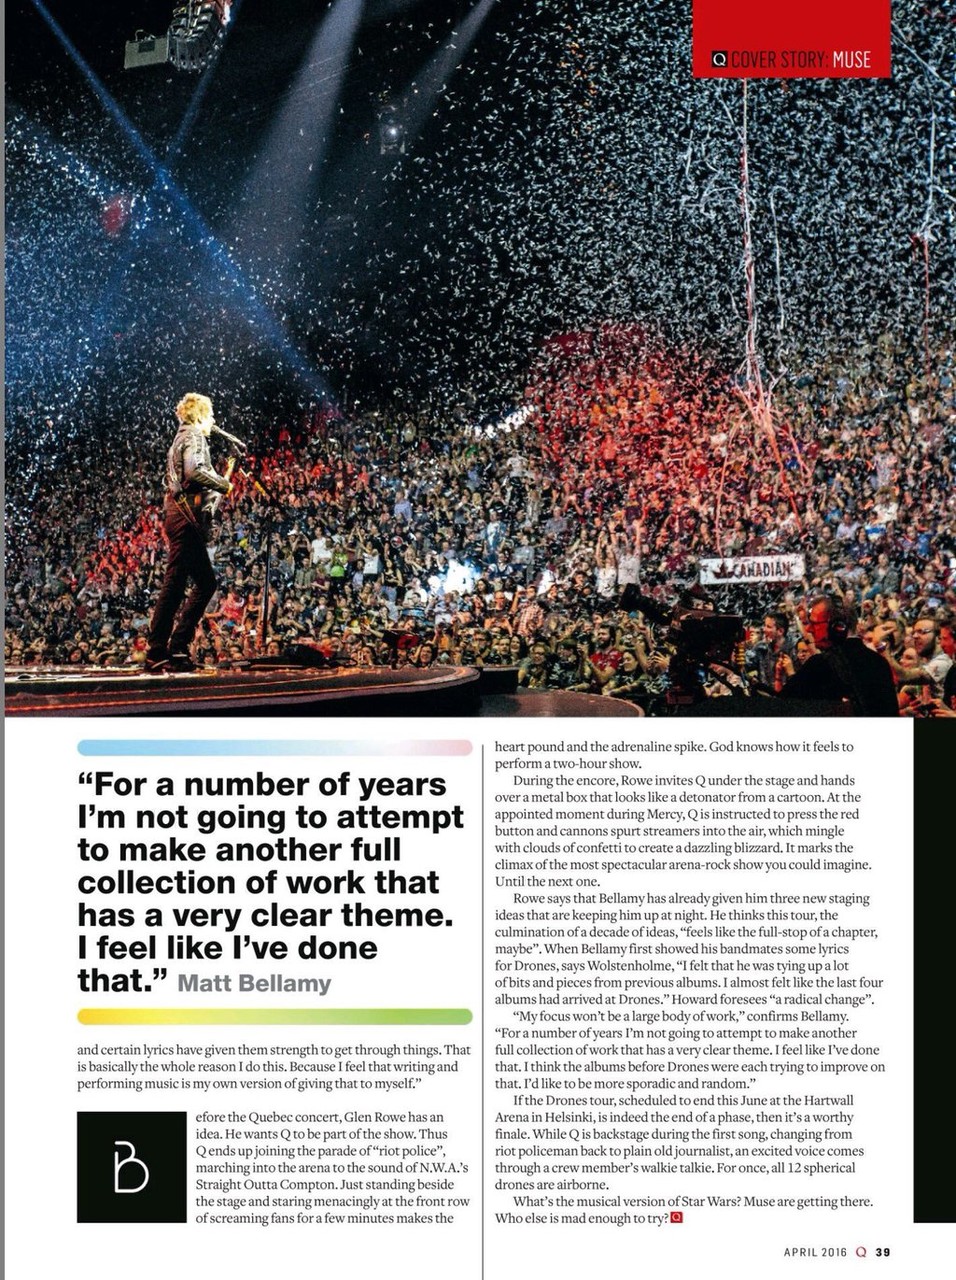 Q magazine, апрель 2016. The Greatest show on Earth - Muse, страница 39